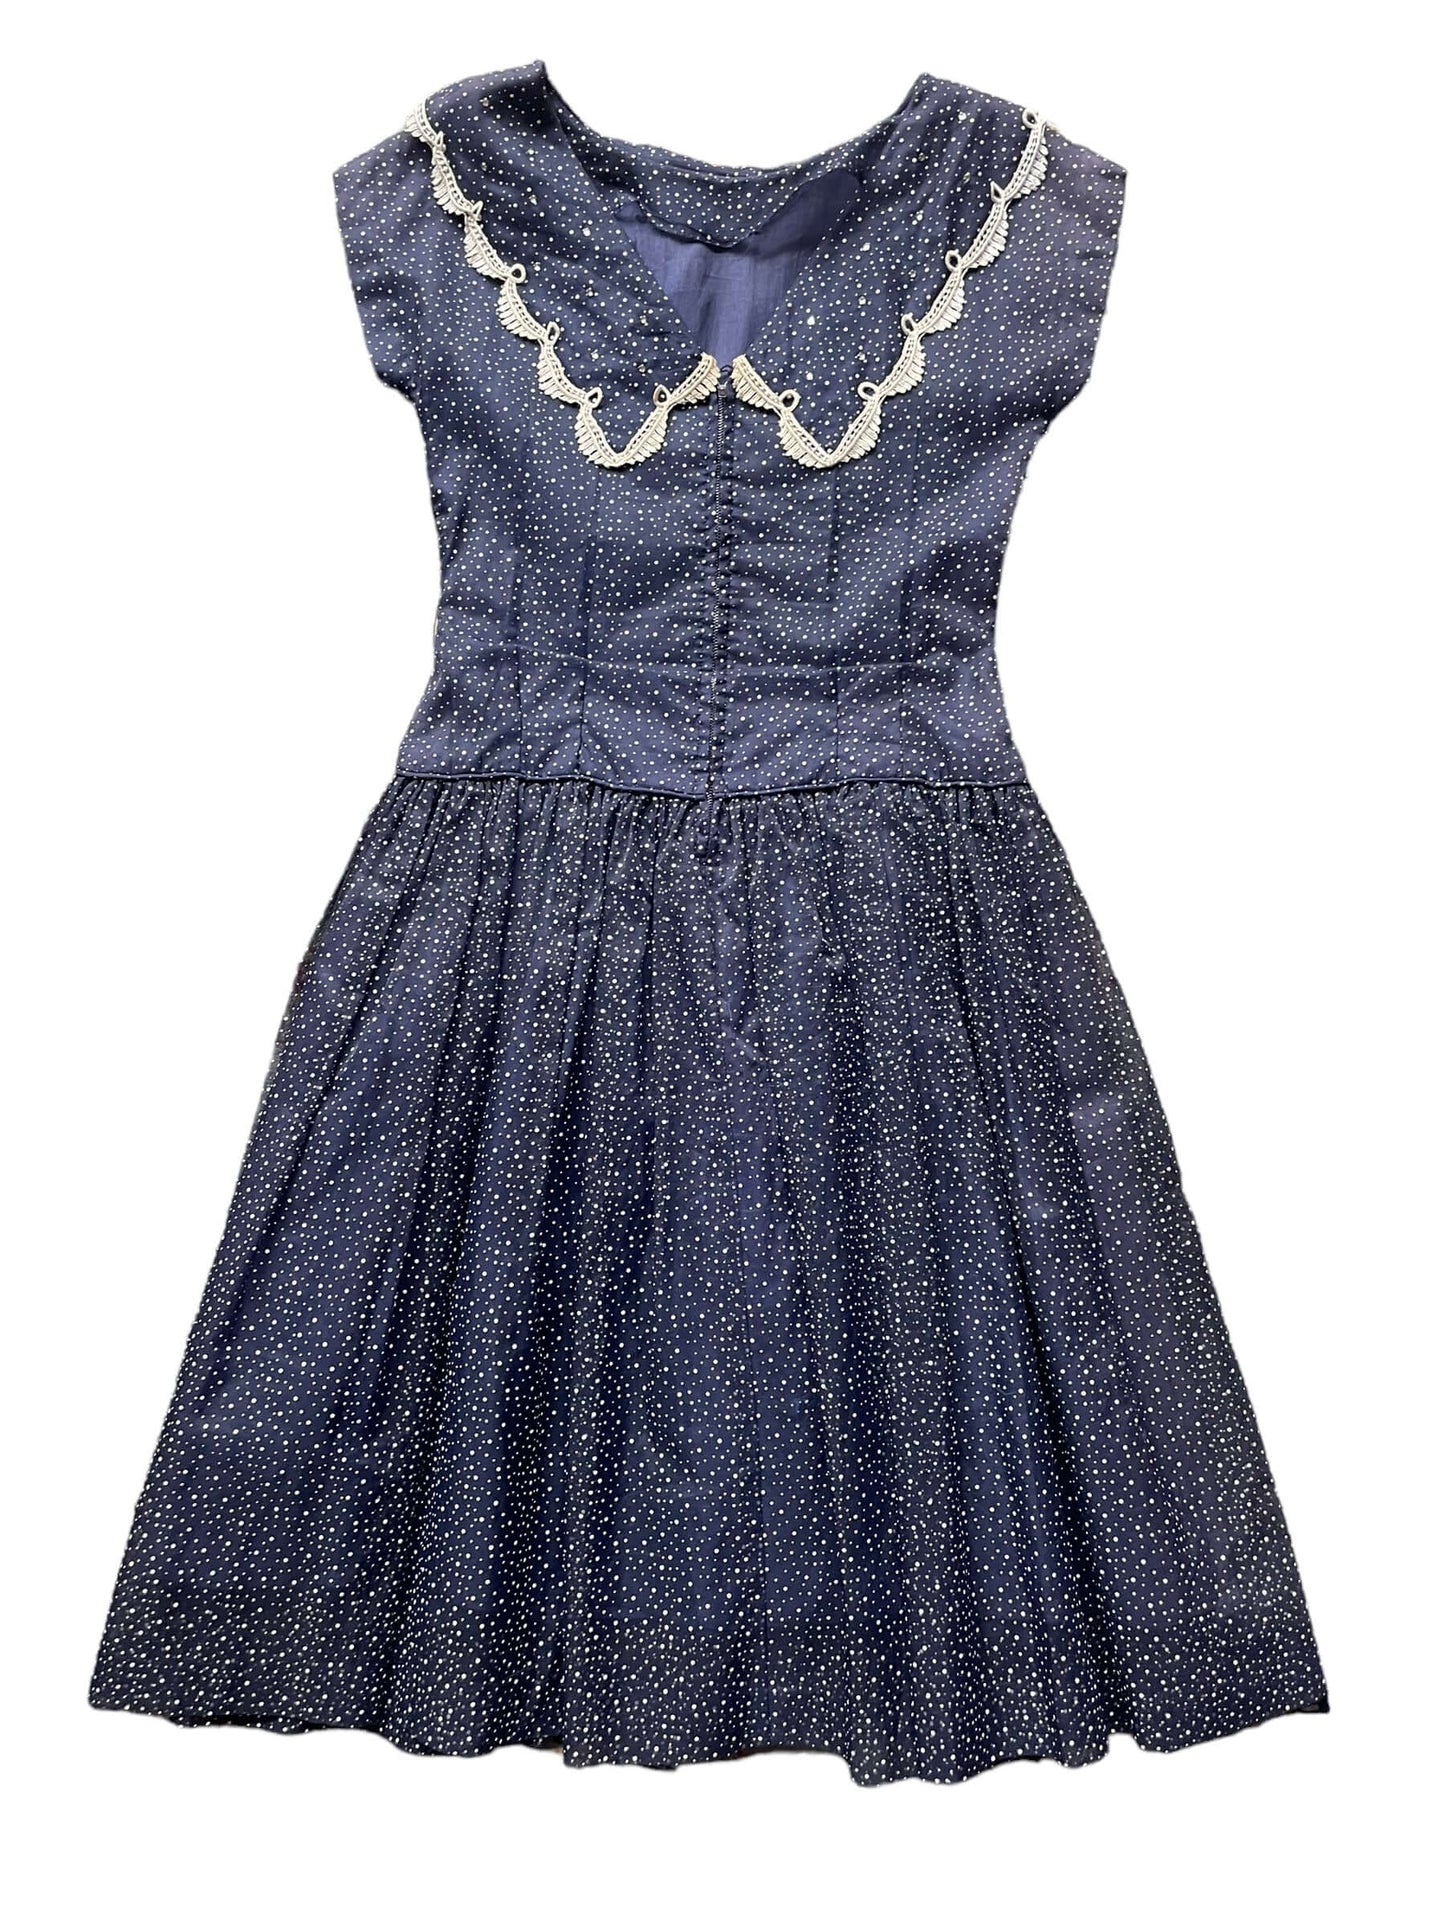 Full back view of Vintage 1940s Navy Blue Swiss Dot Dress |  Barn Owl Vintage Dresses | Seattle Vintage Ladies Clothing